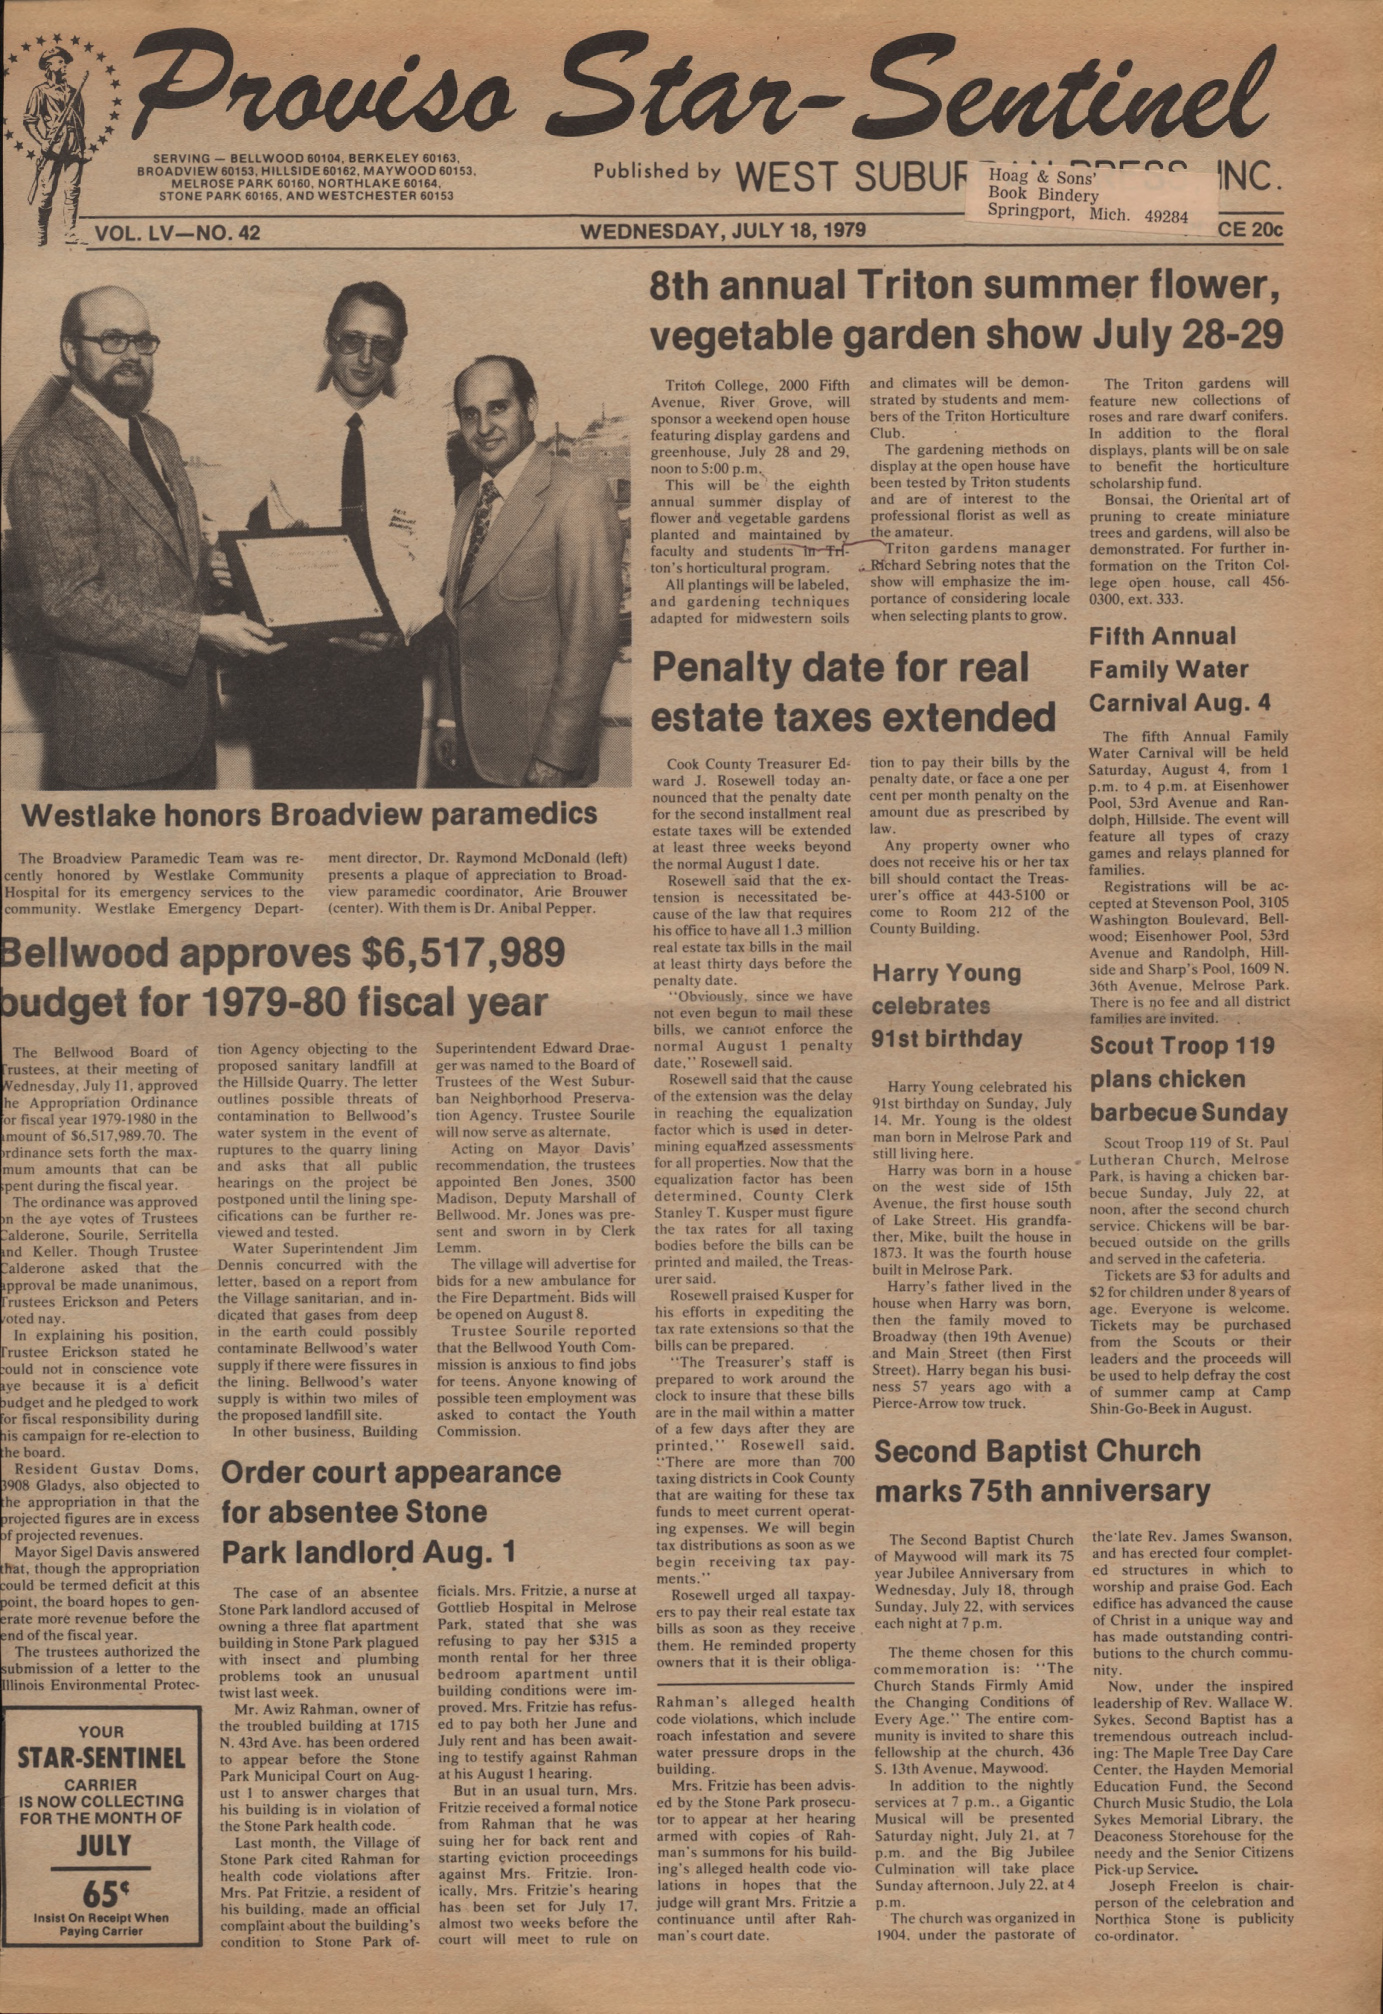 Proviso Star-Sentinel – 19790718